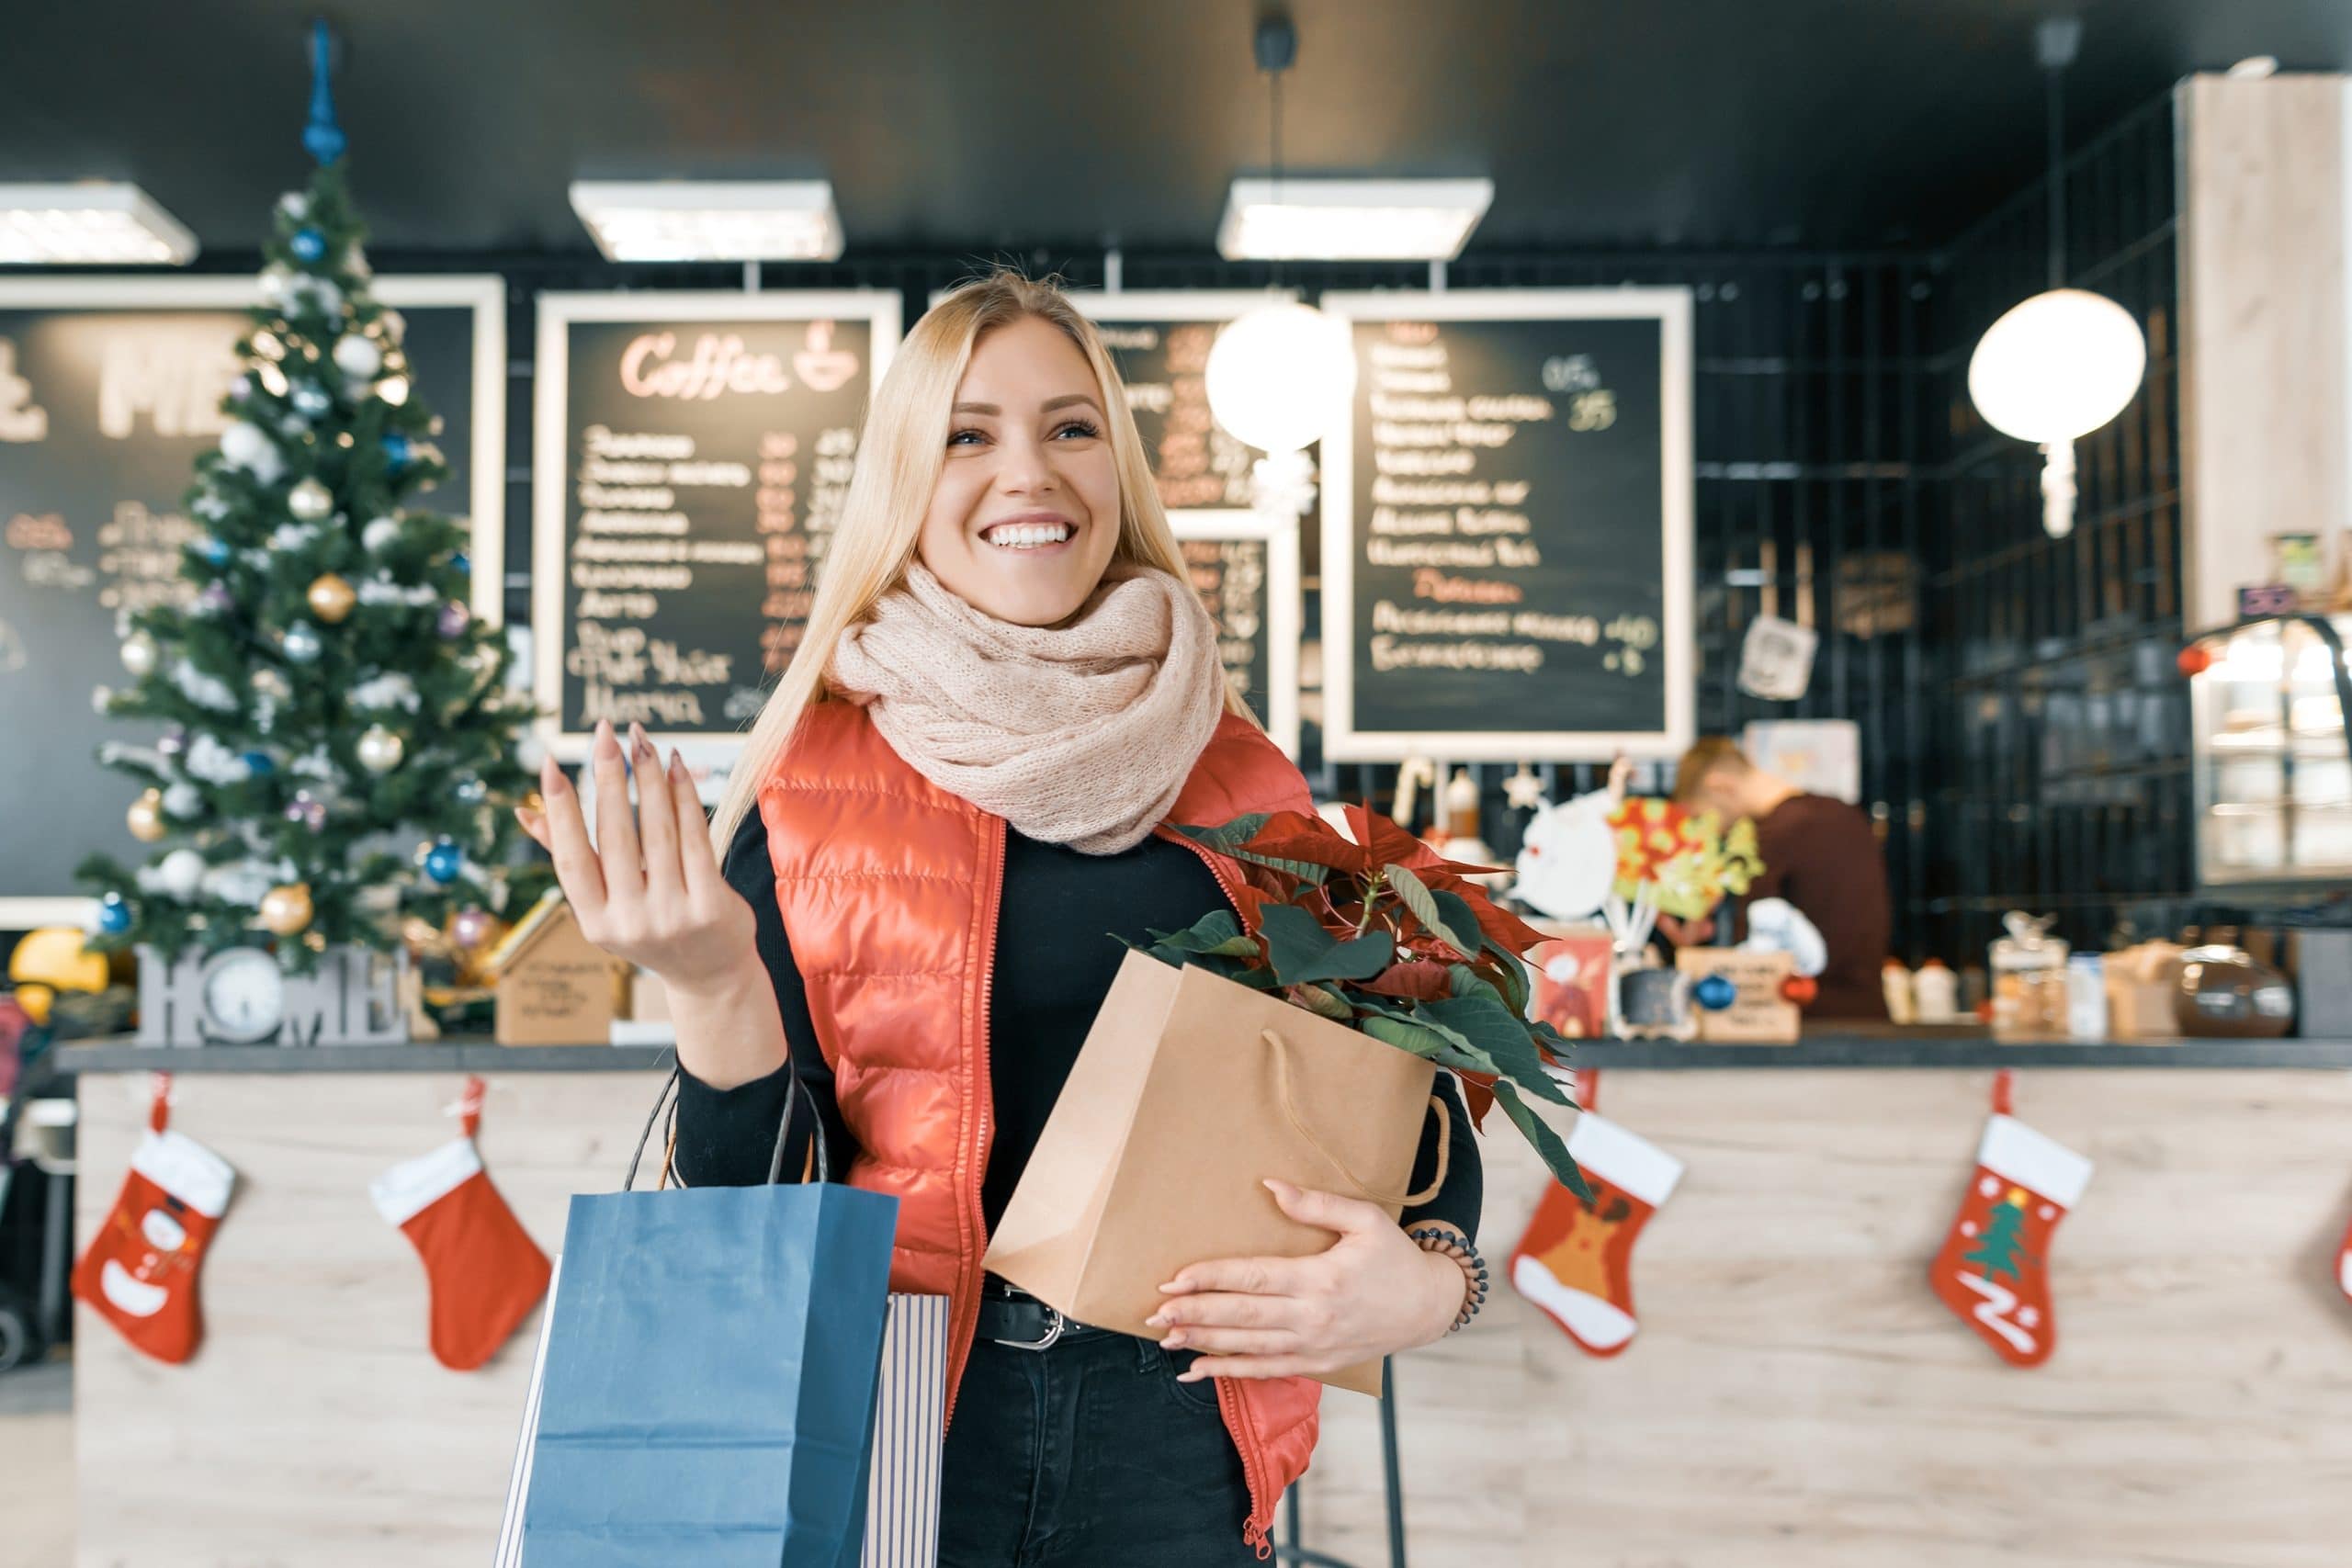 25 days of Christmas shopping: Saving tips for your 2019 budget